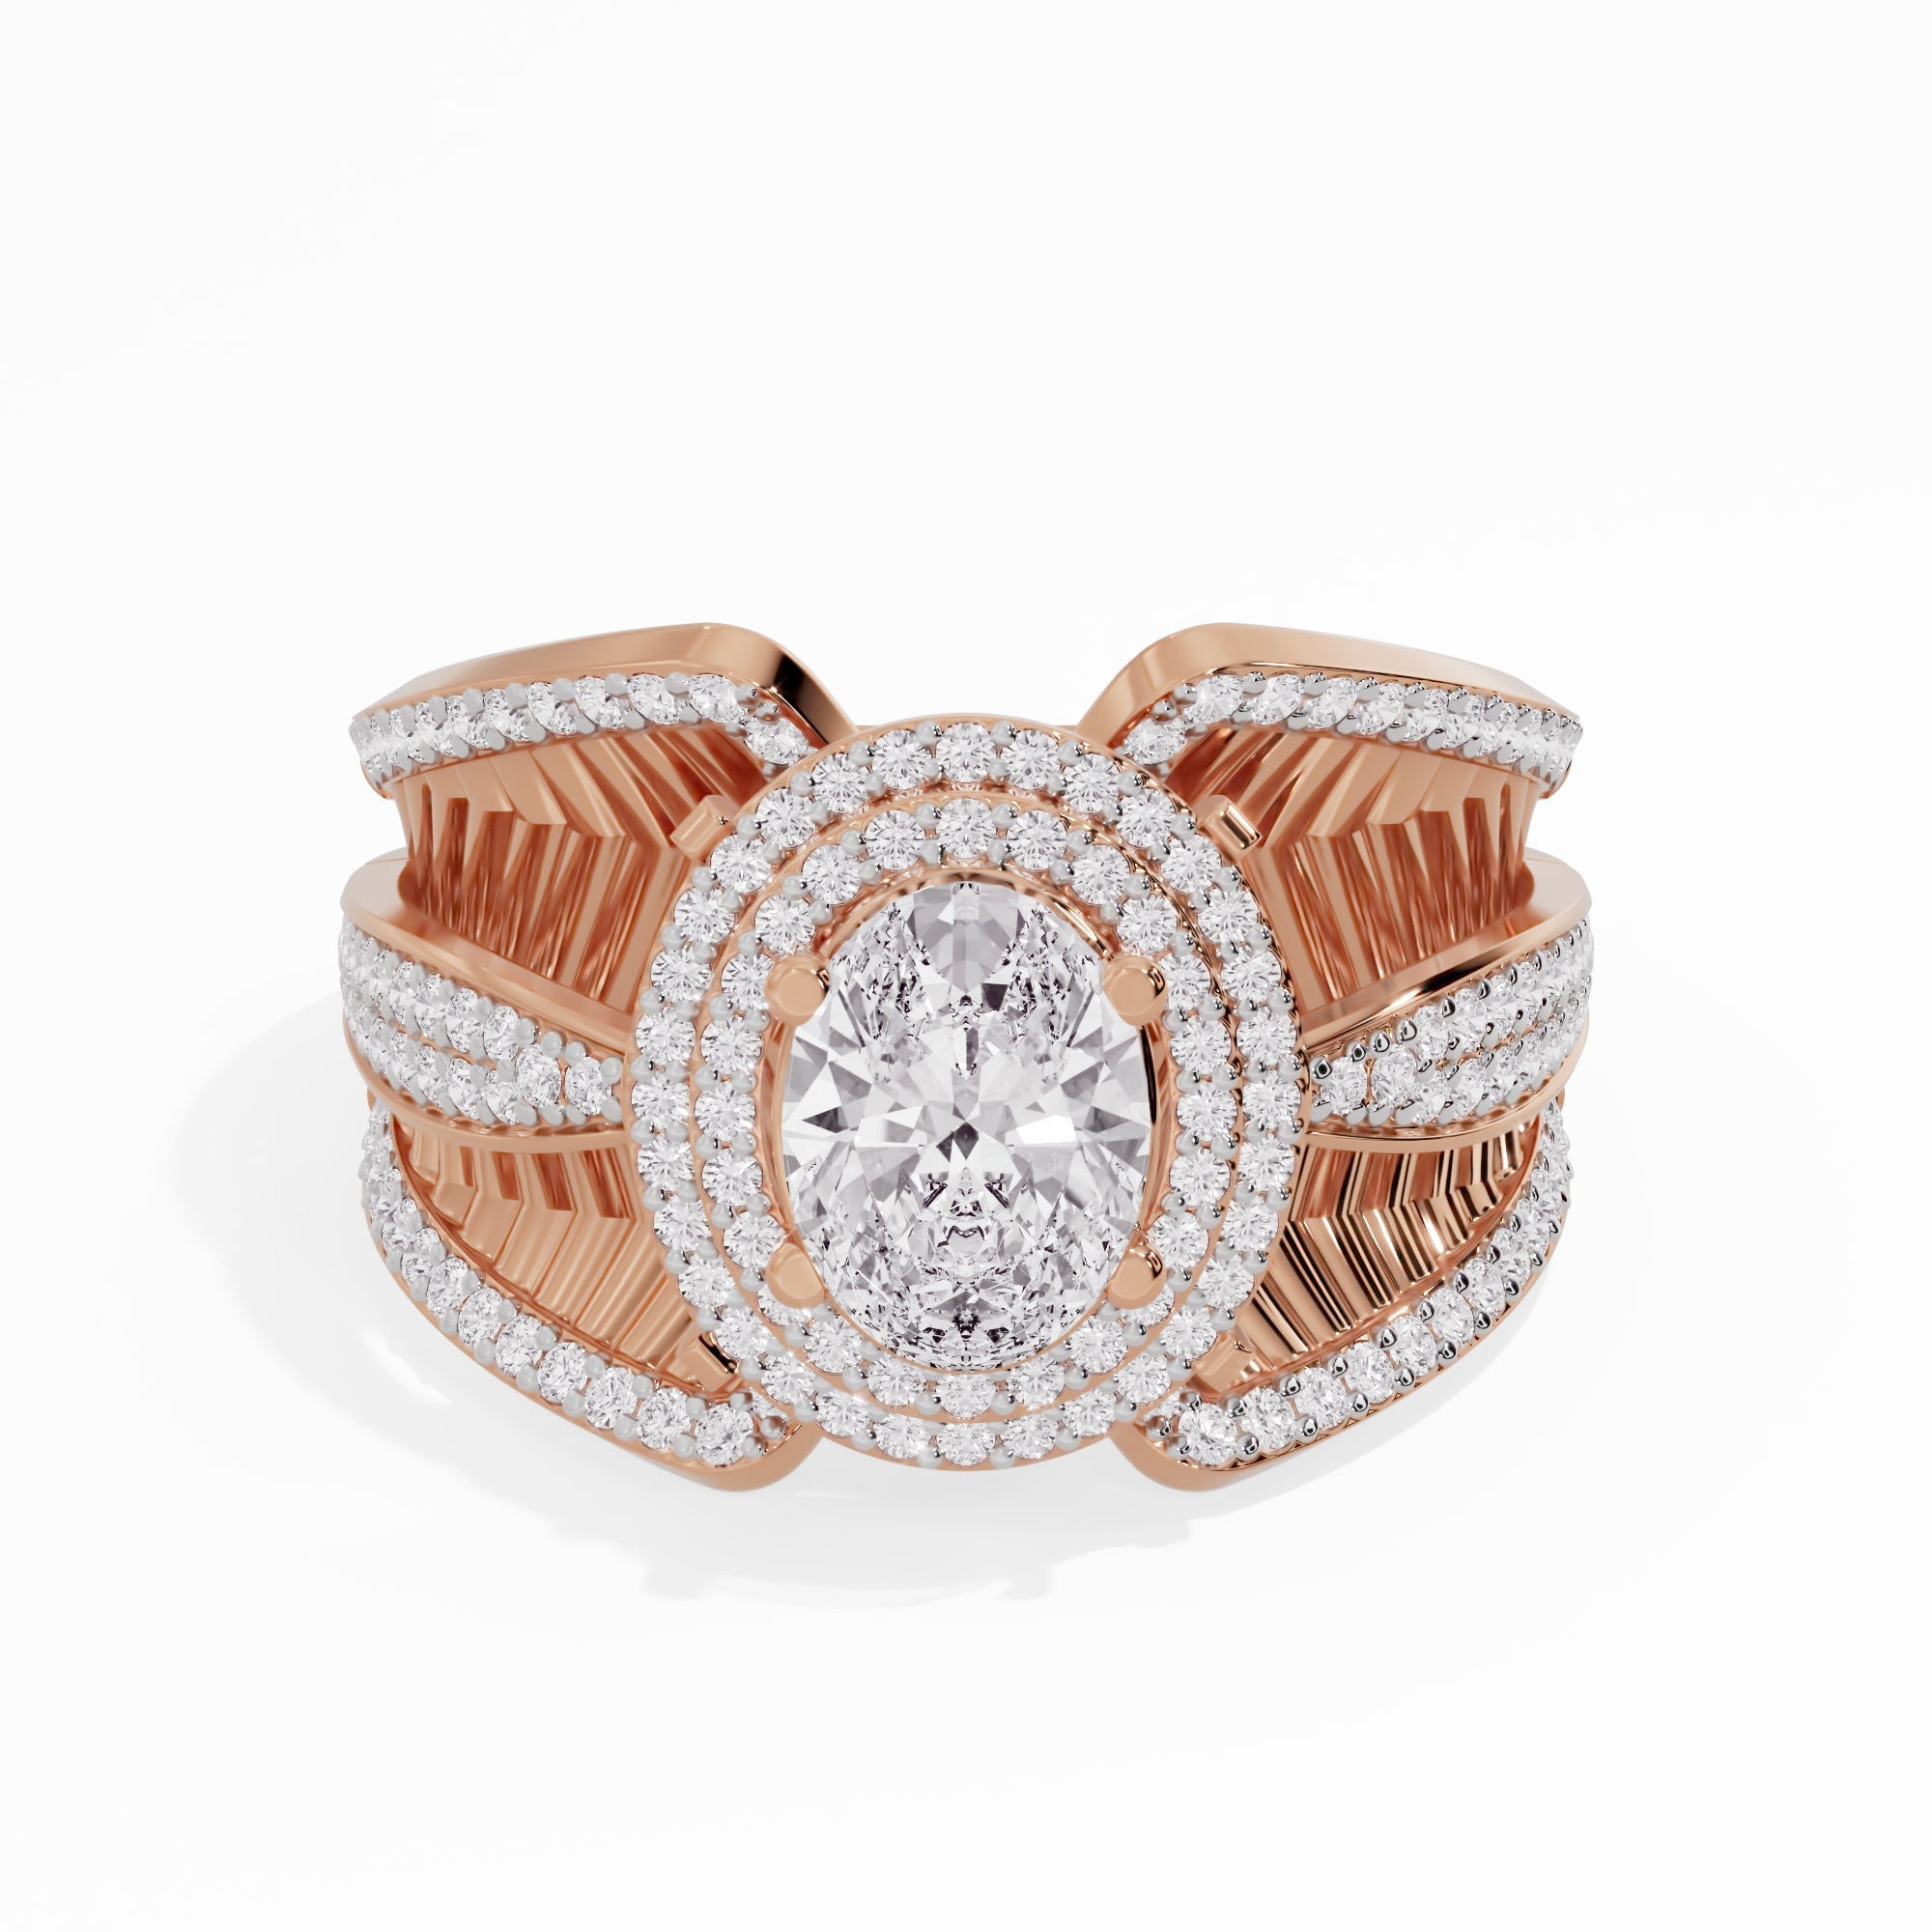 Majestic Marquise Diamond Ring